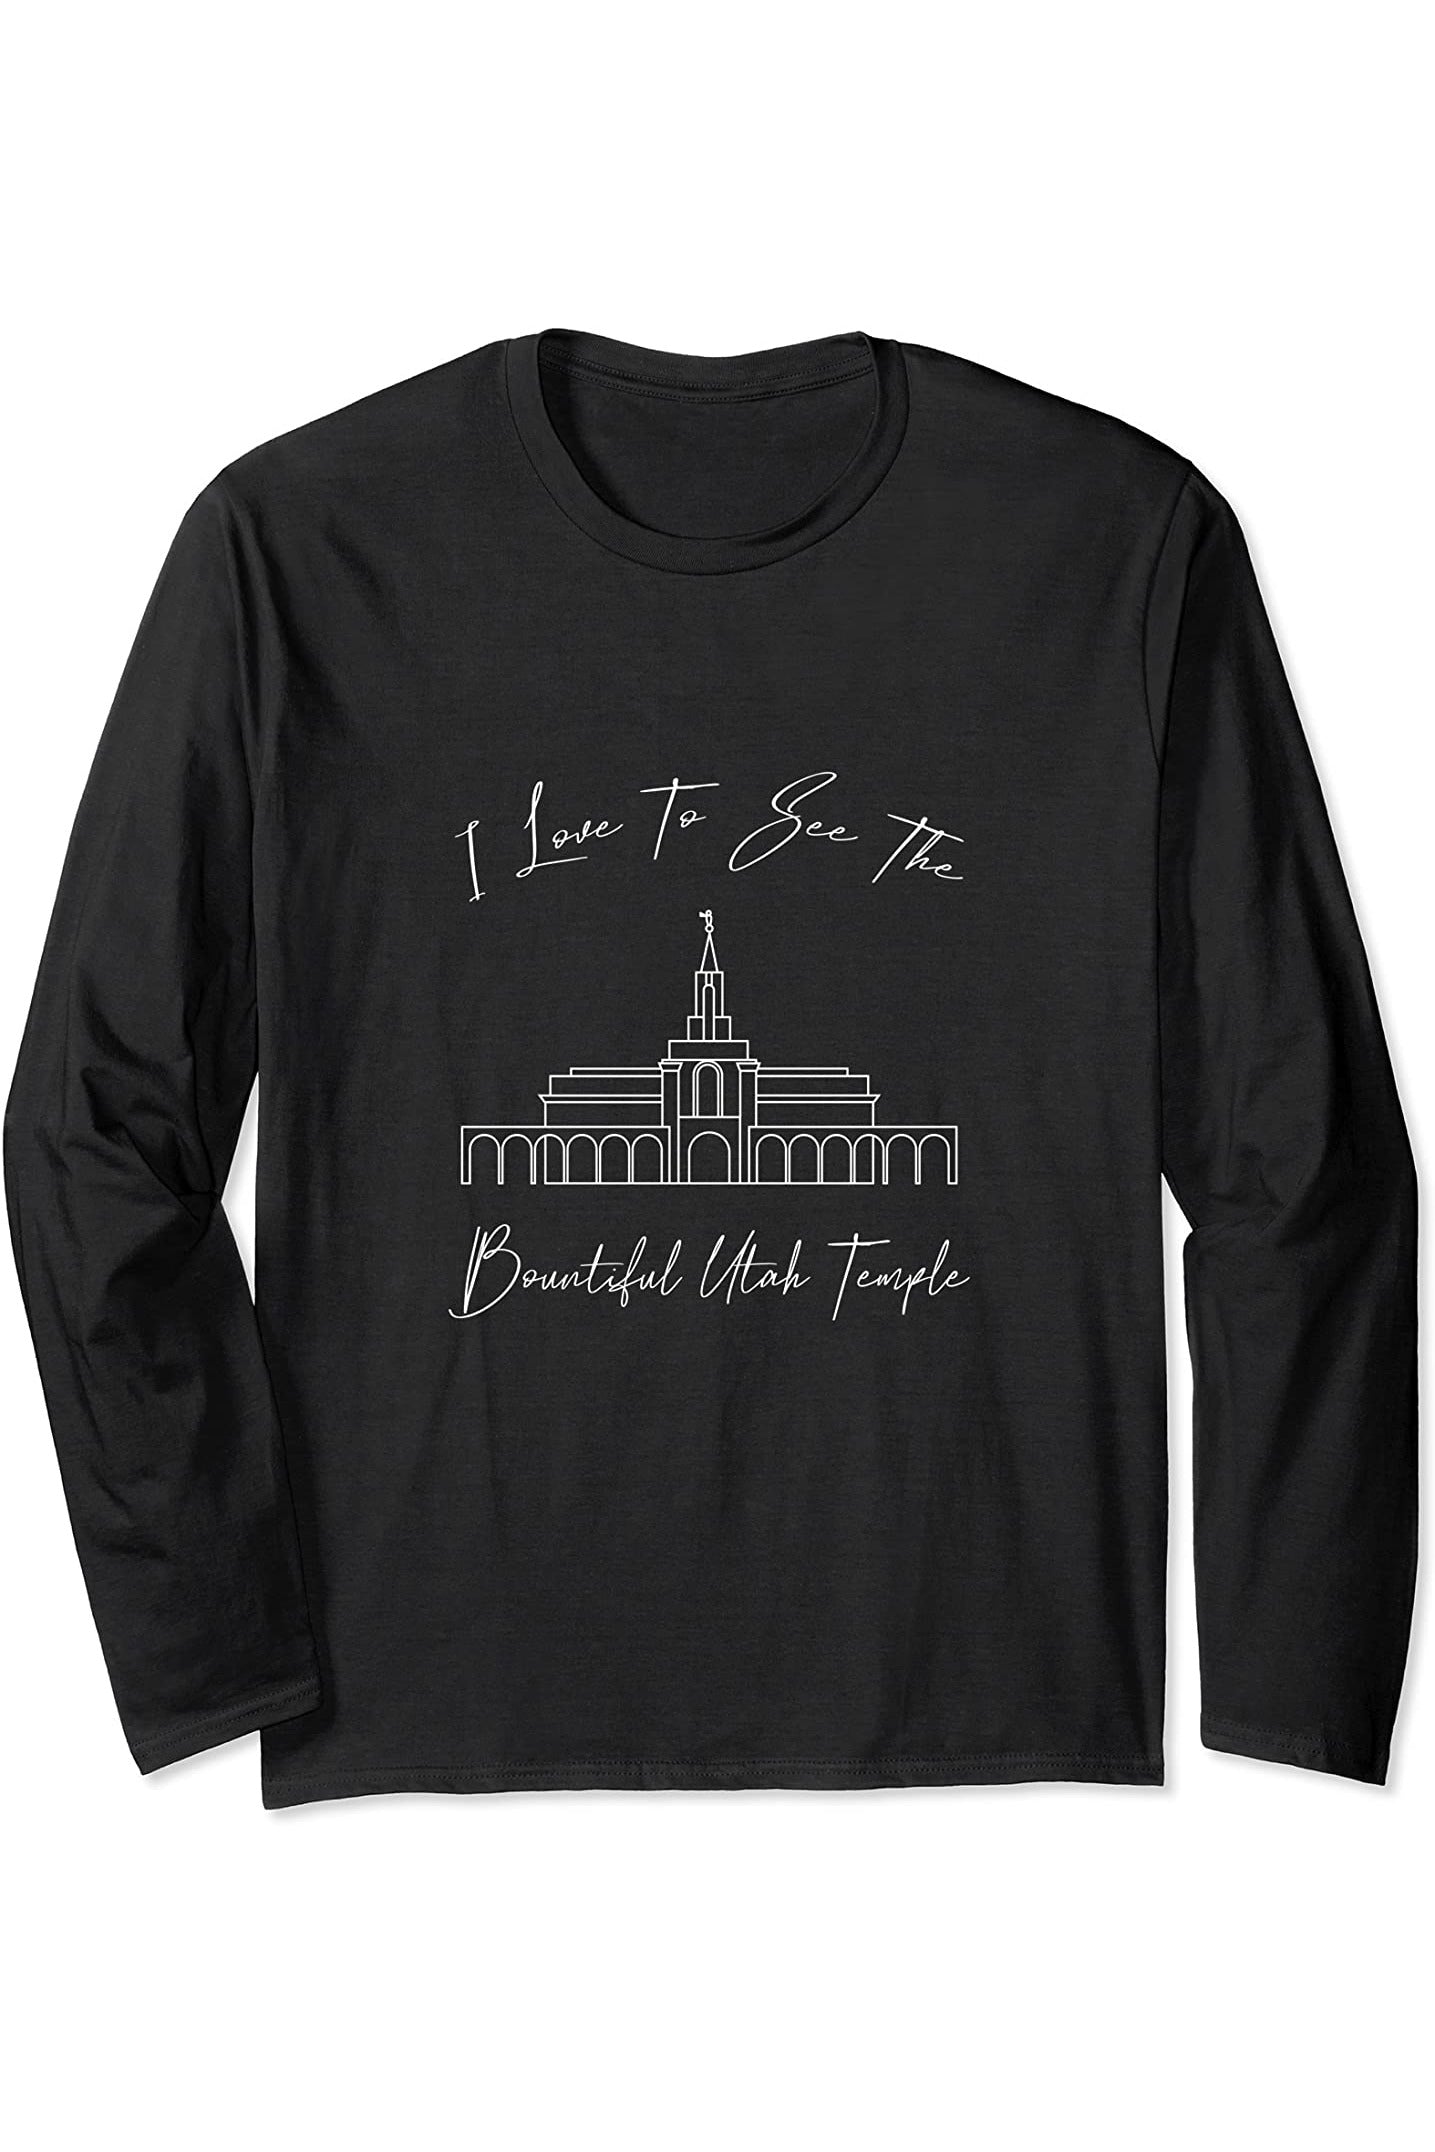 Bountiful Utah Temple Long Sleeve T-Shirt - Calligraphy Style (English) US